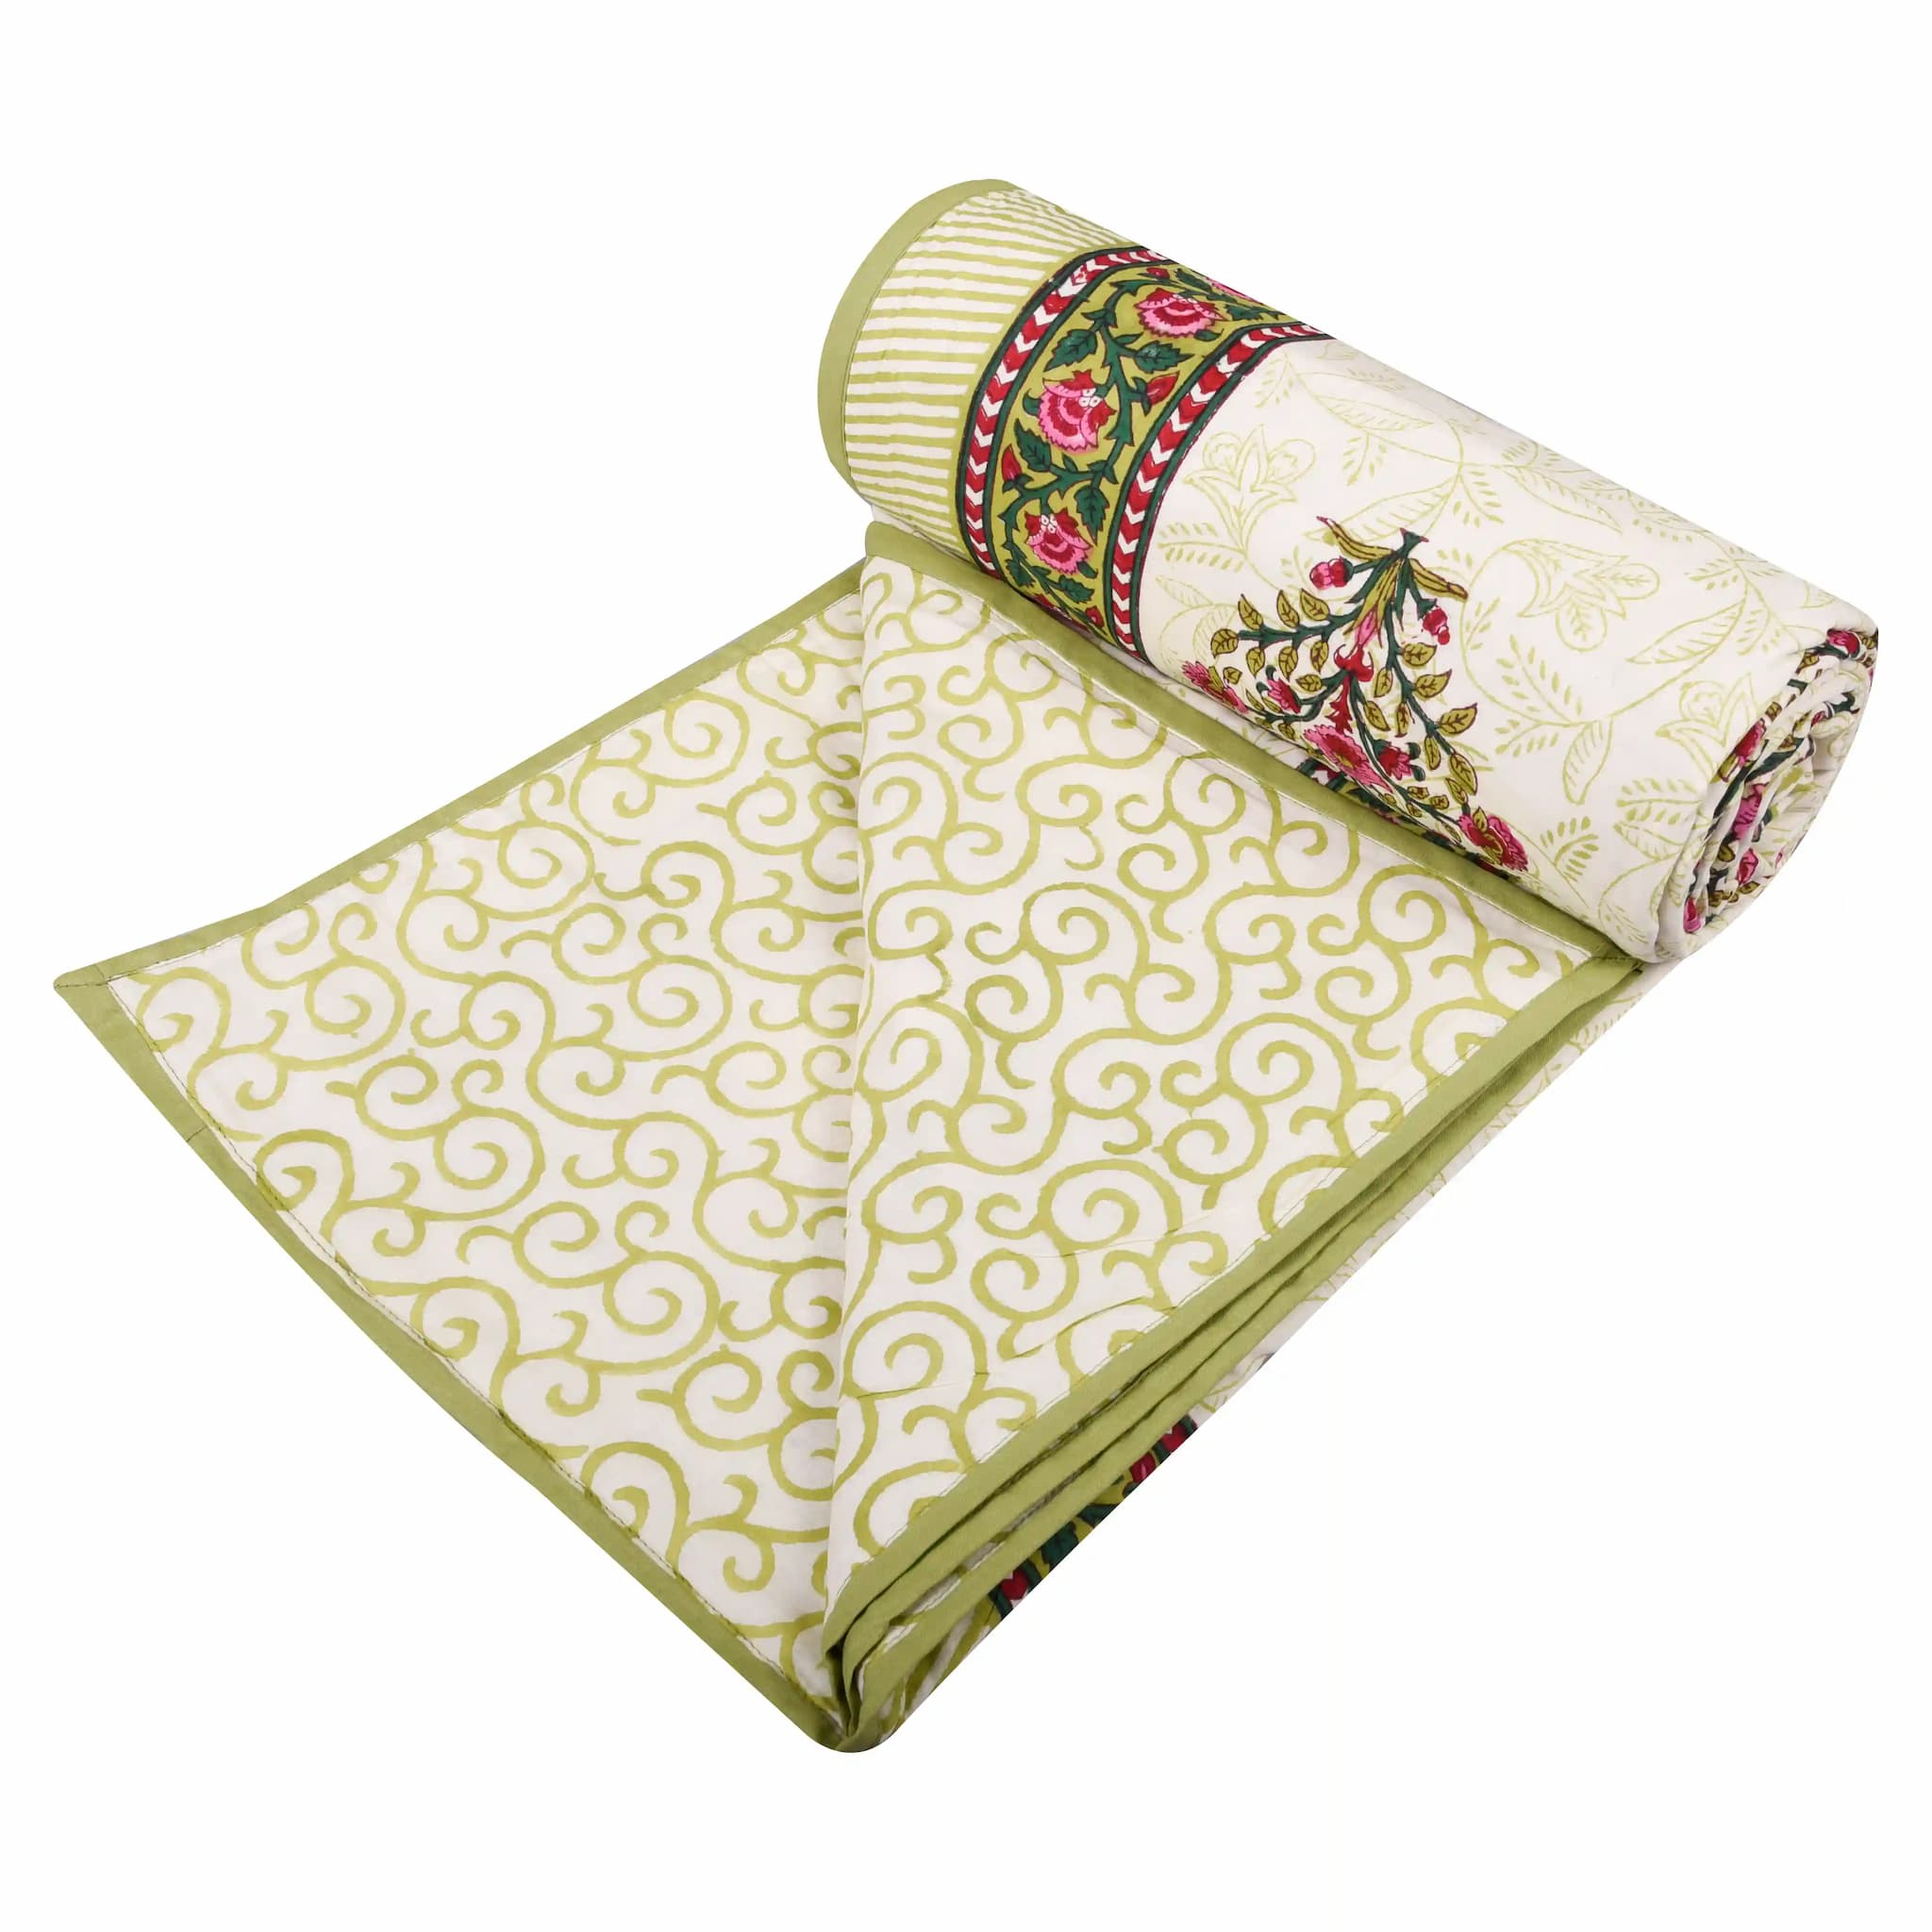 Jaipur Dohar Hand Block Printed Single Bed Cotton Dohar - Mustard Pink Bouquet